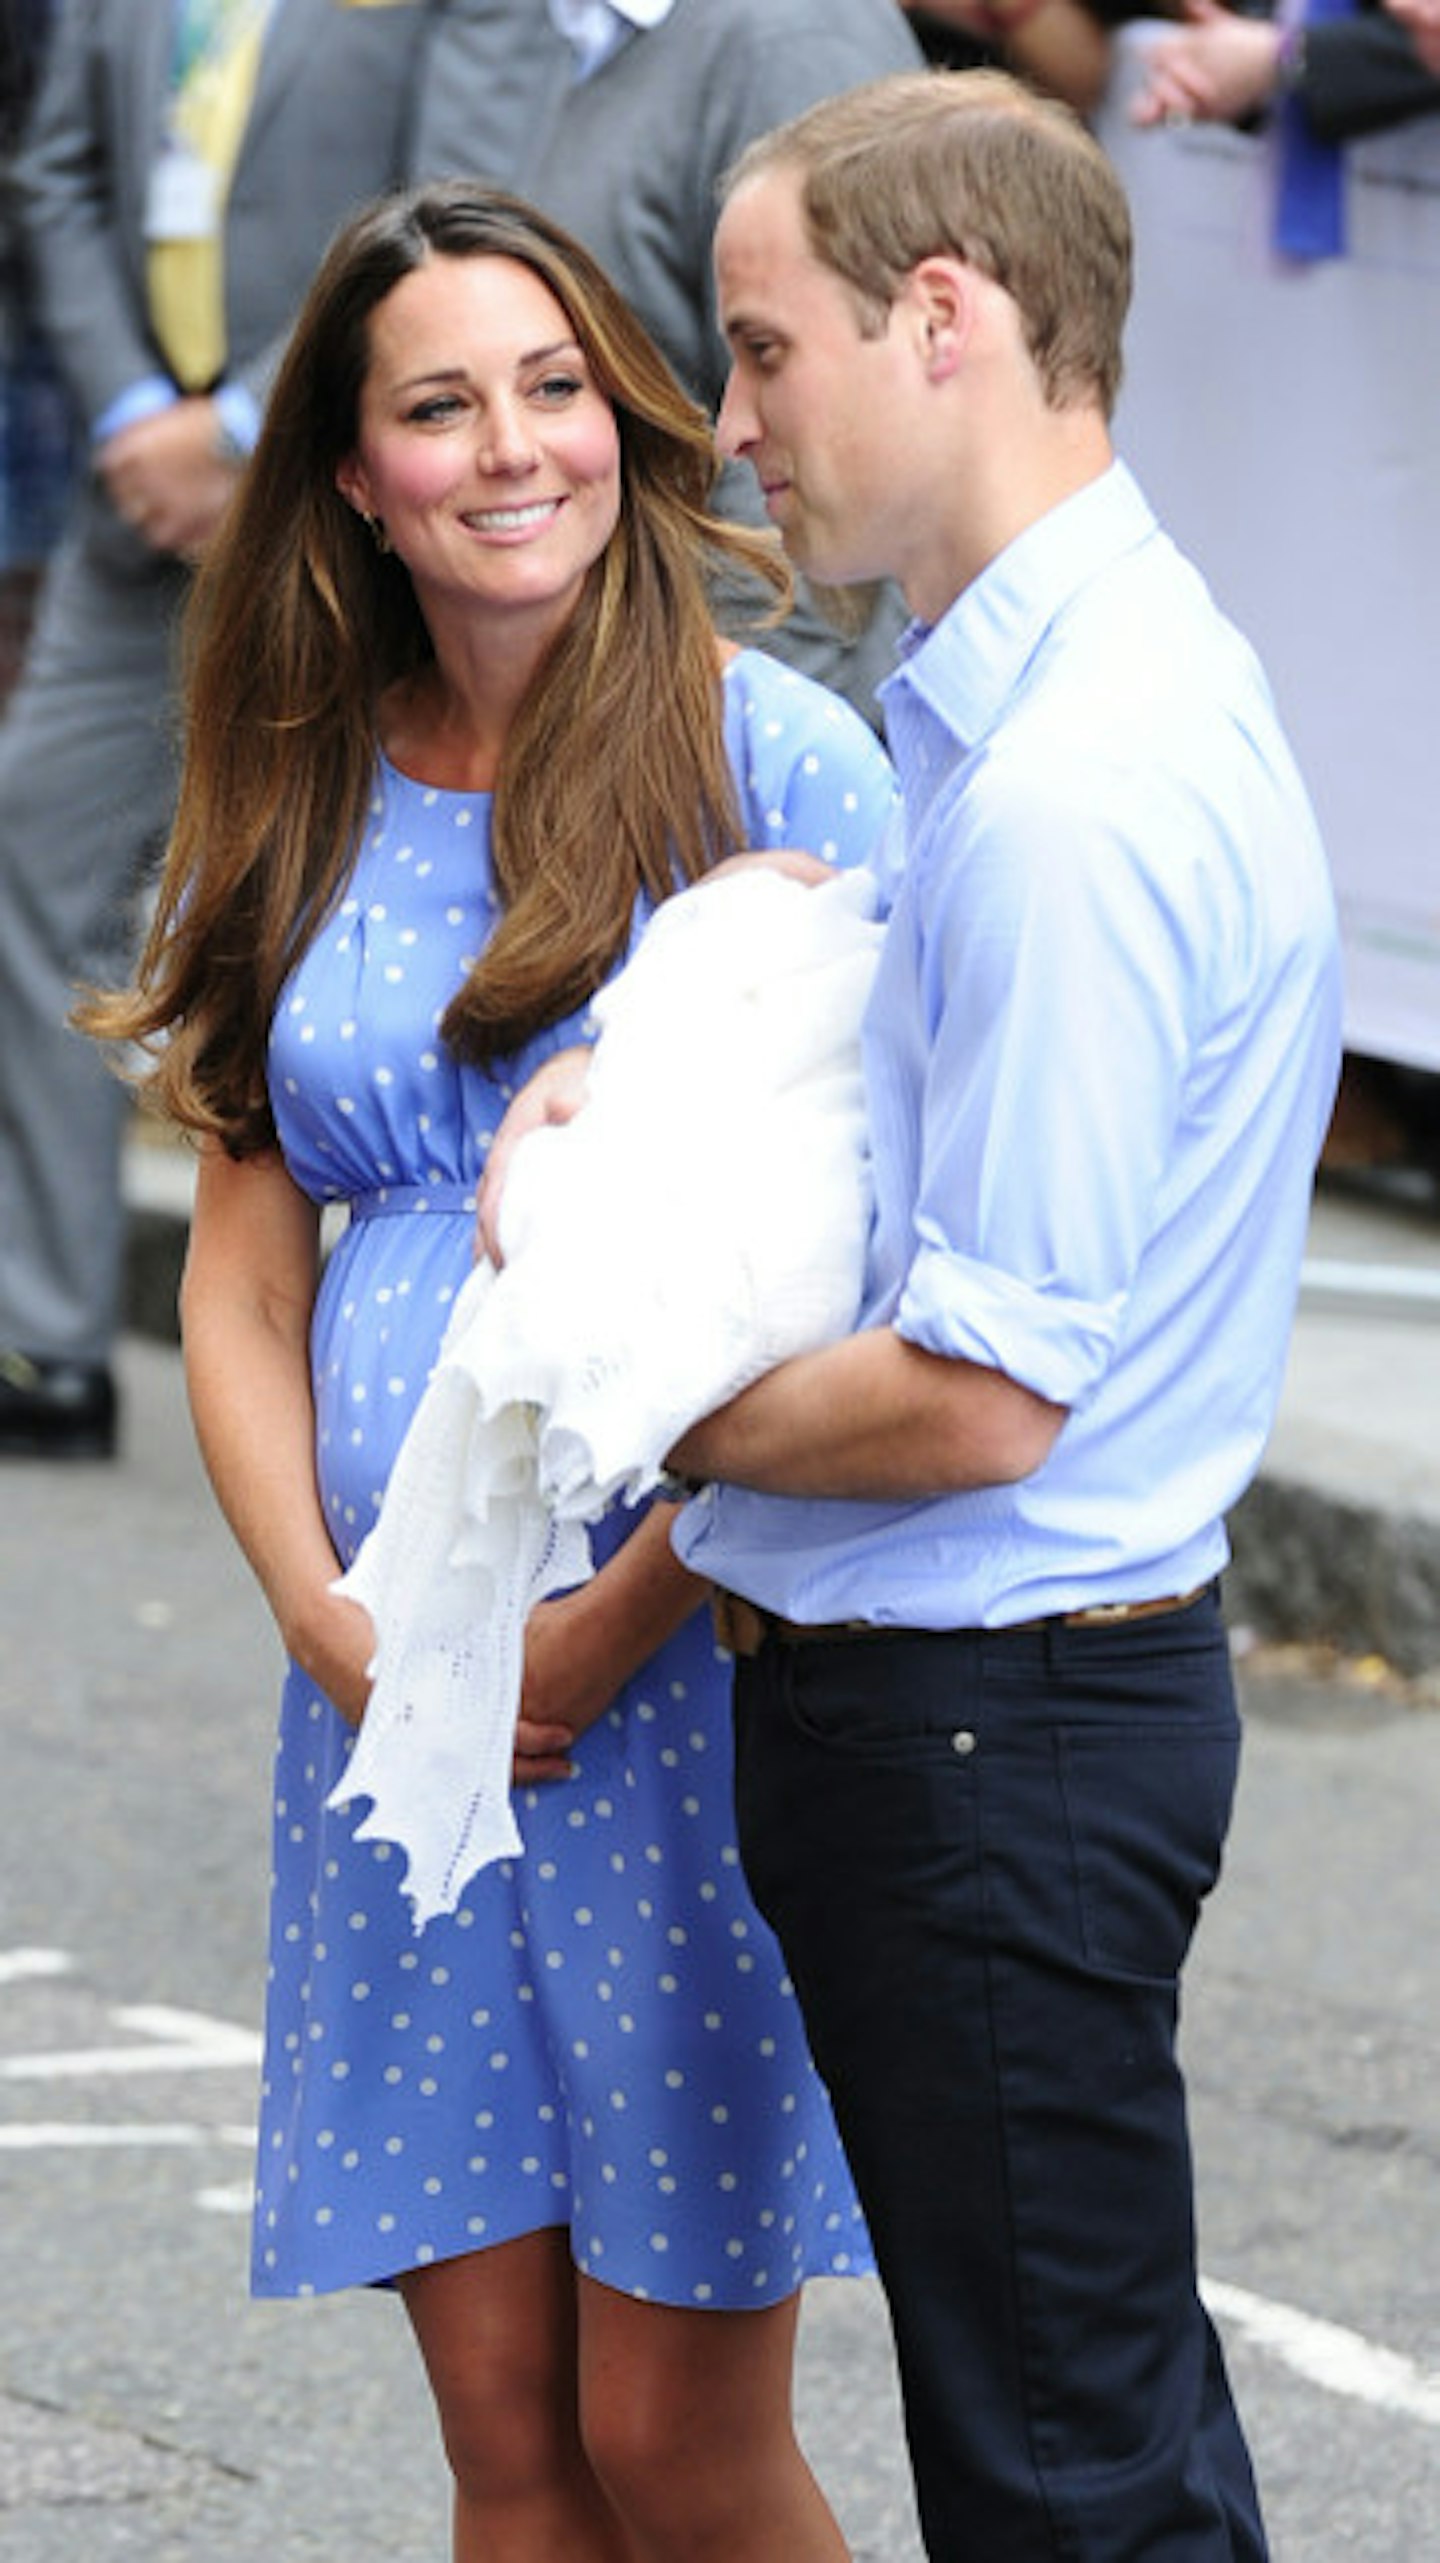 Kate gave birth to baby George last year